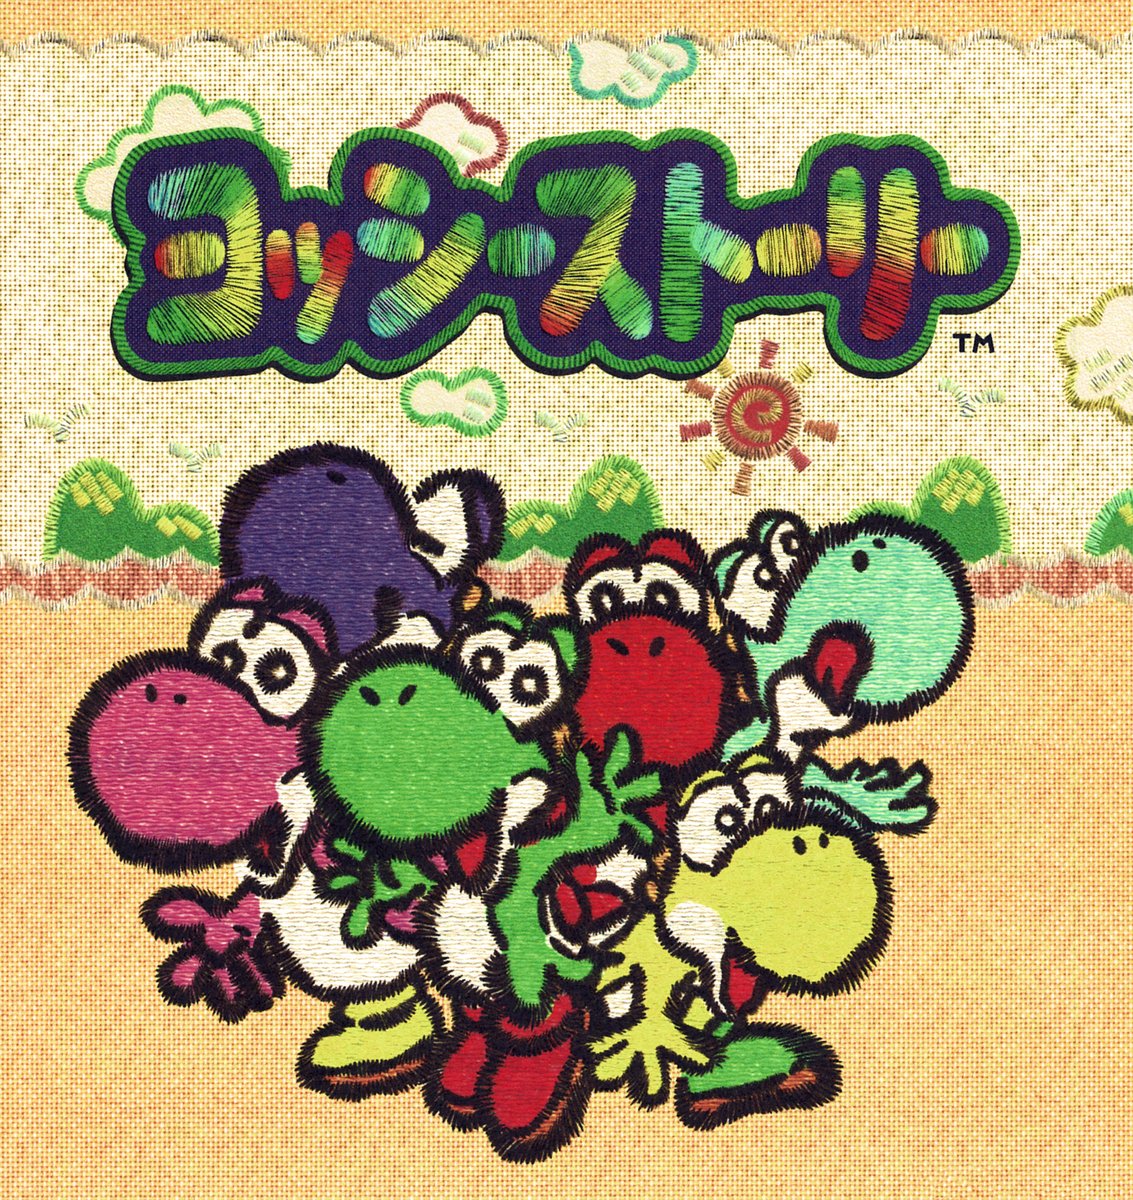 Japanese Manual Artwork
'Yoshi's Story'
Nintendo 64